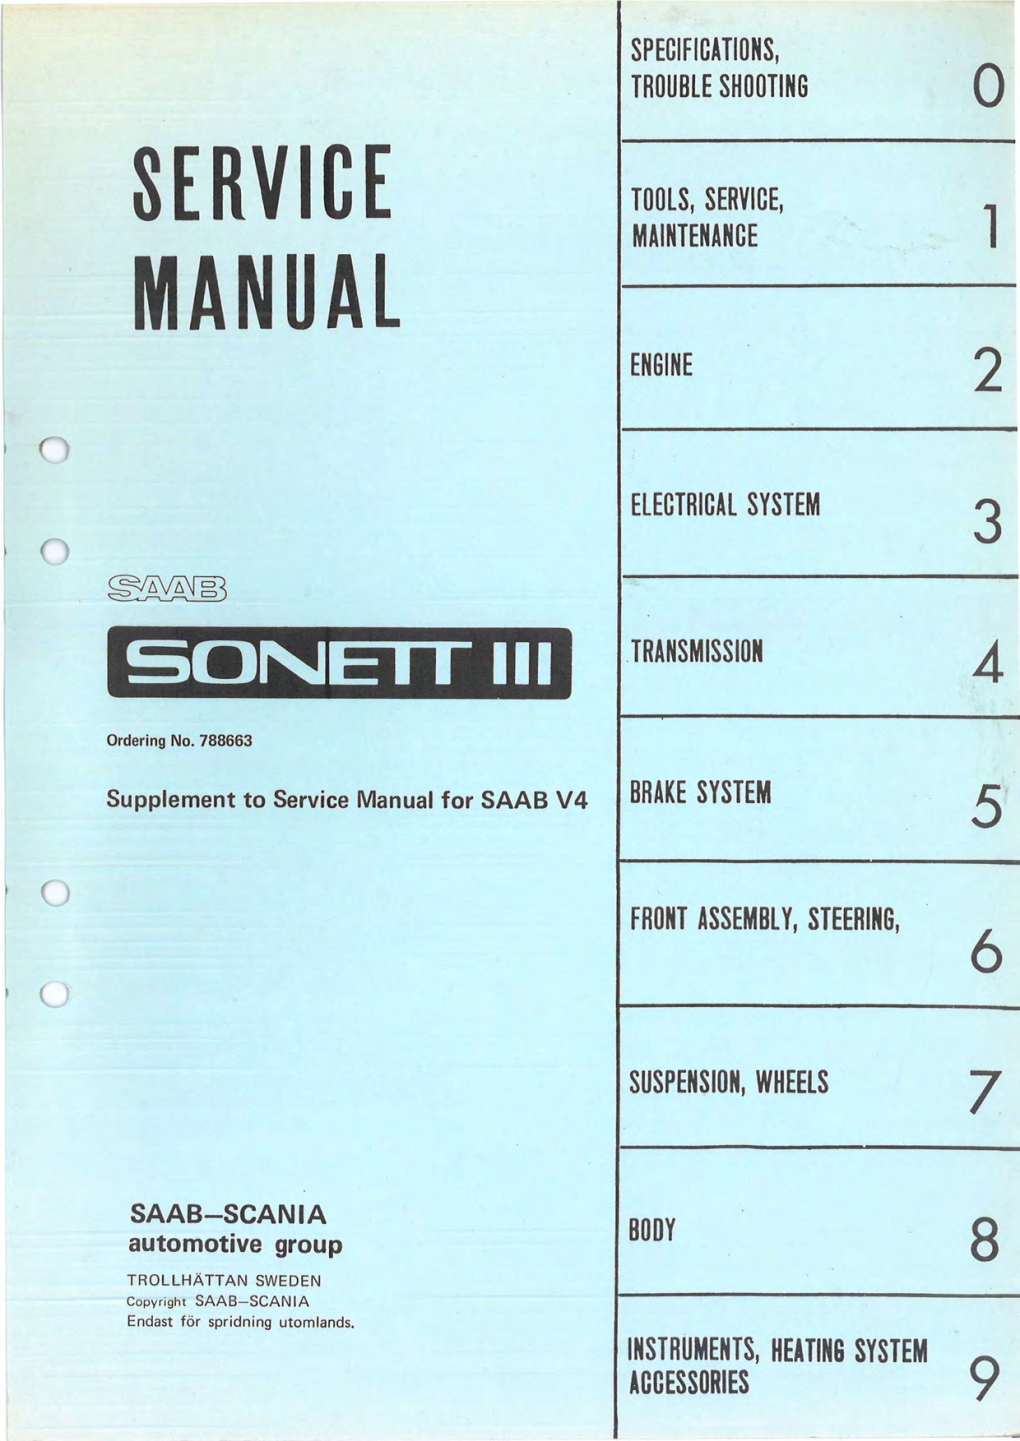 Service Manual for SAAB V4 BRAKE SYSTEM 5